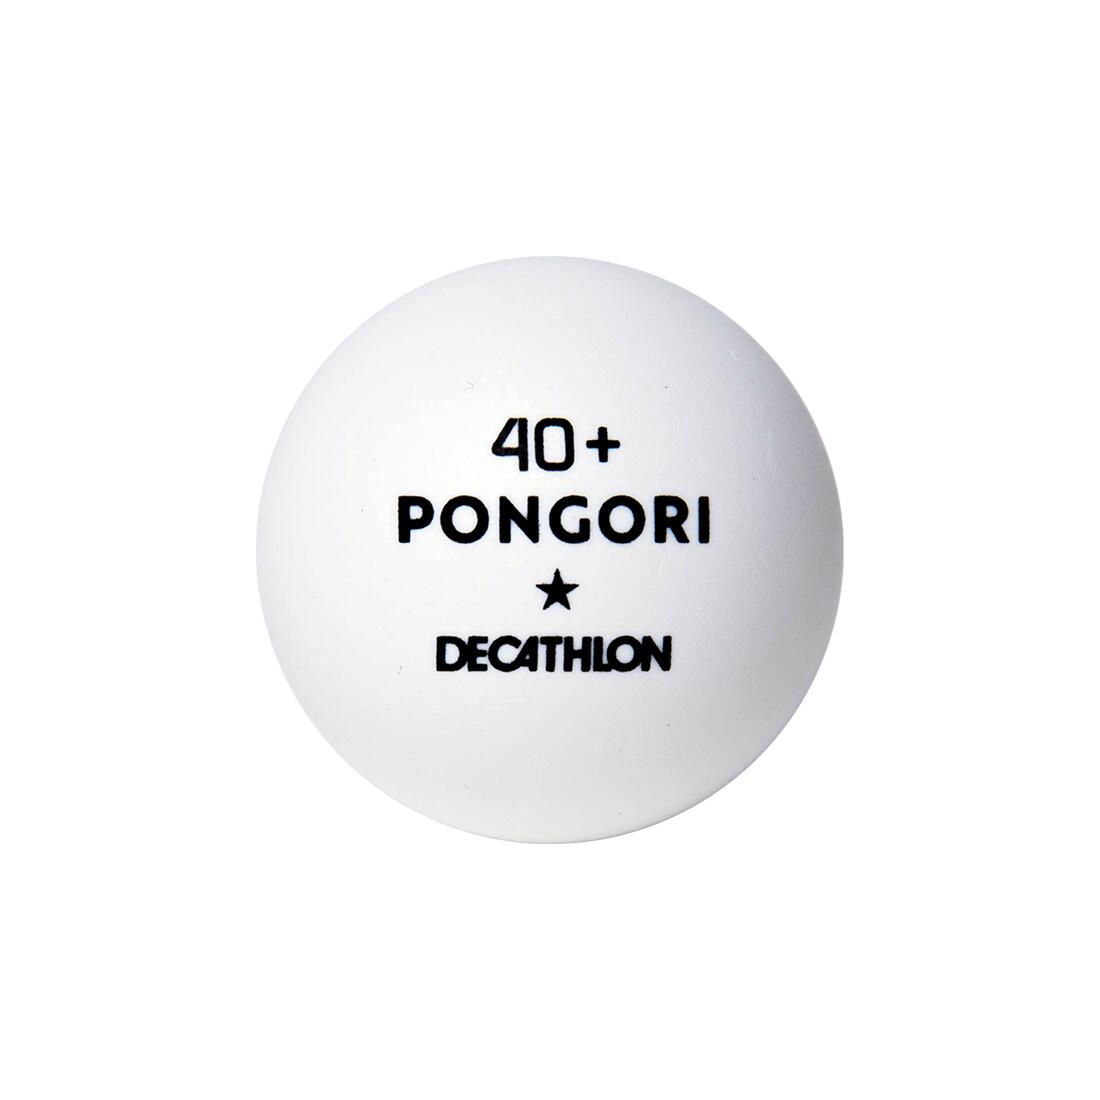 PONGORI(ポンゴリ) 卓球 ボール 100 40+ 6個入